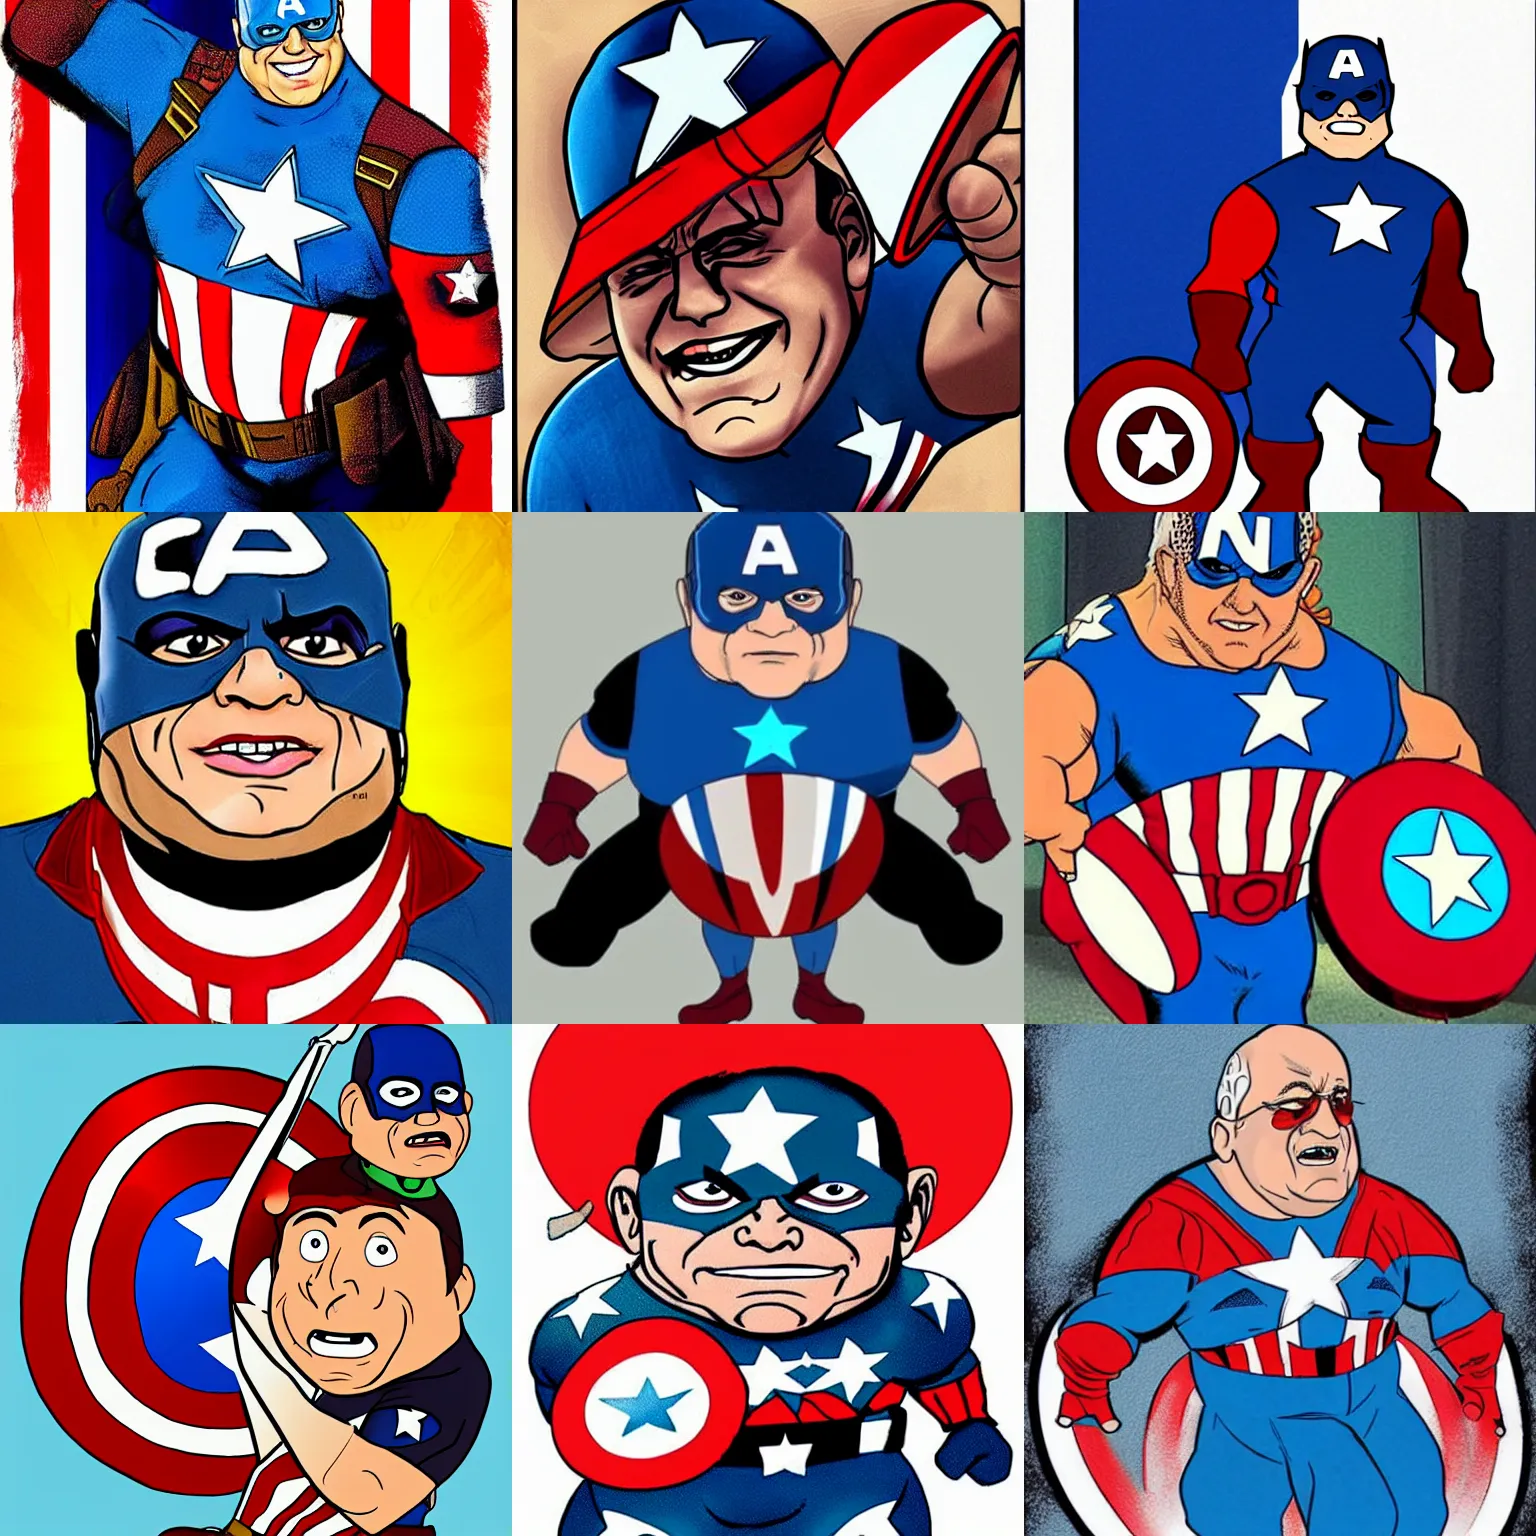 Prompt: danny devito as captain america, cartoon